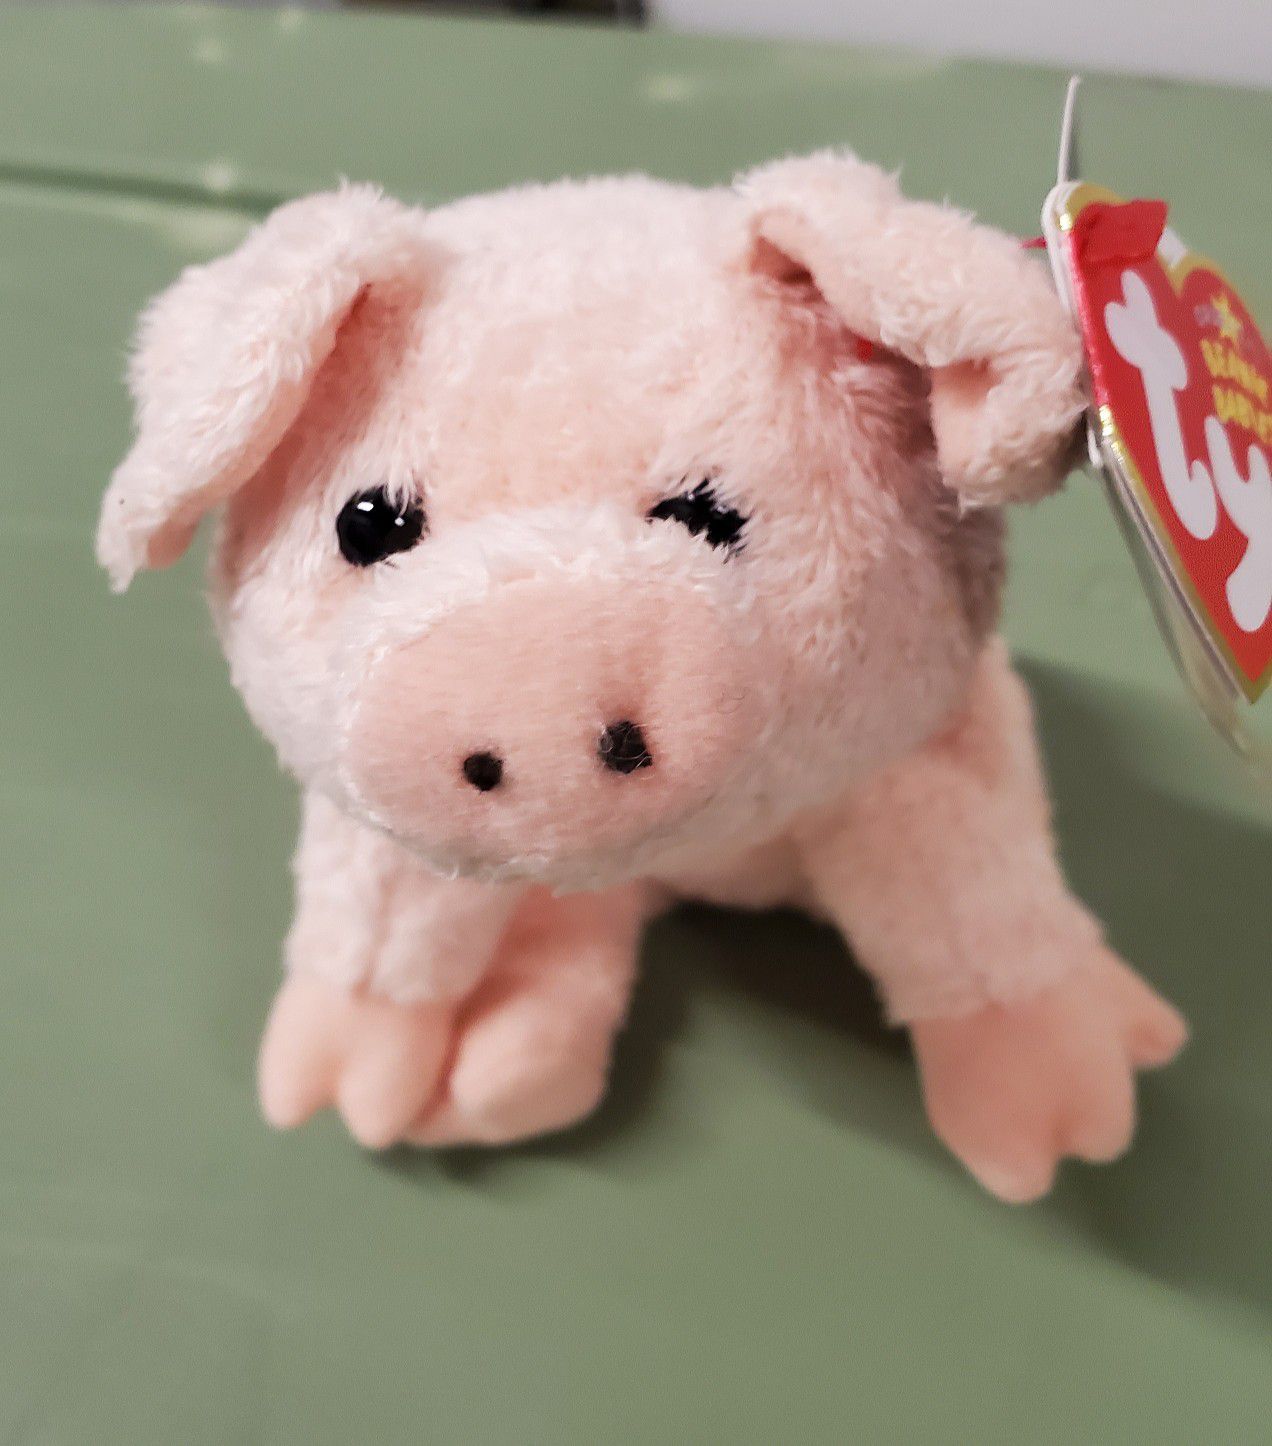 TY BEANIE BABY CHARLOTTE'S WEB WILBUR the PIG Plush Stuffed Animal Soft beanie Toy 6” Brand New tagged